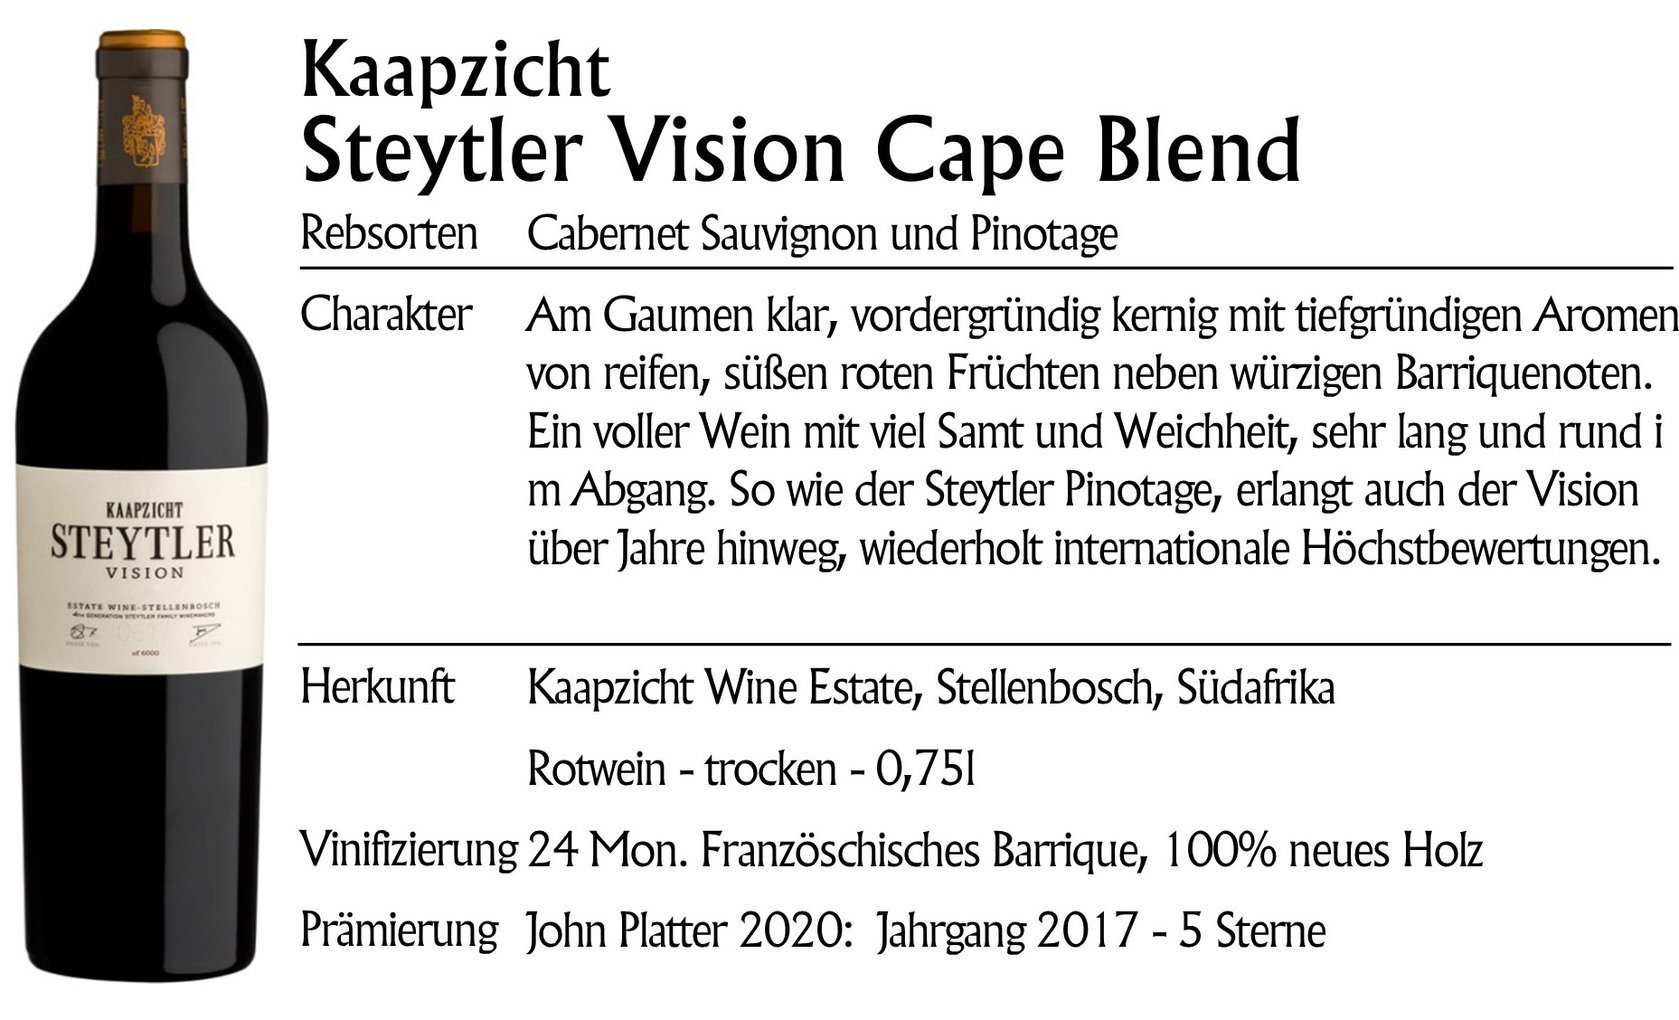 Kaapzicht Steytler Vision Cape Blend 2017